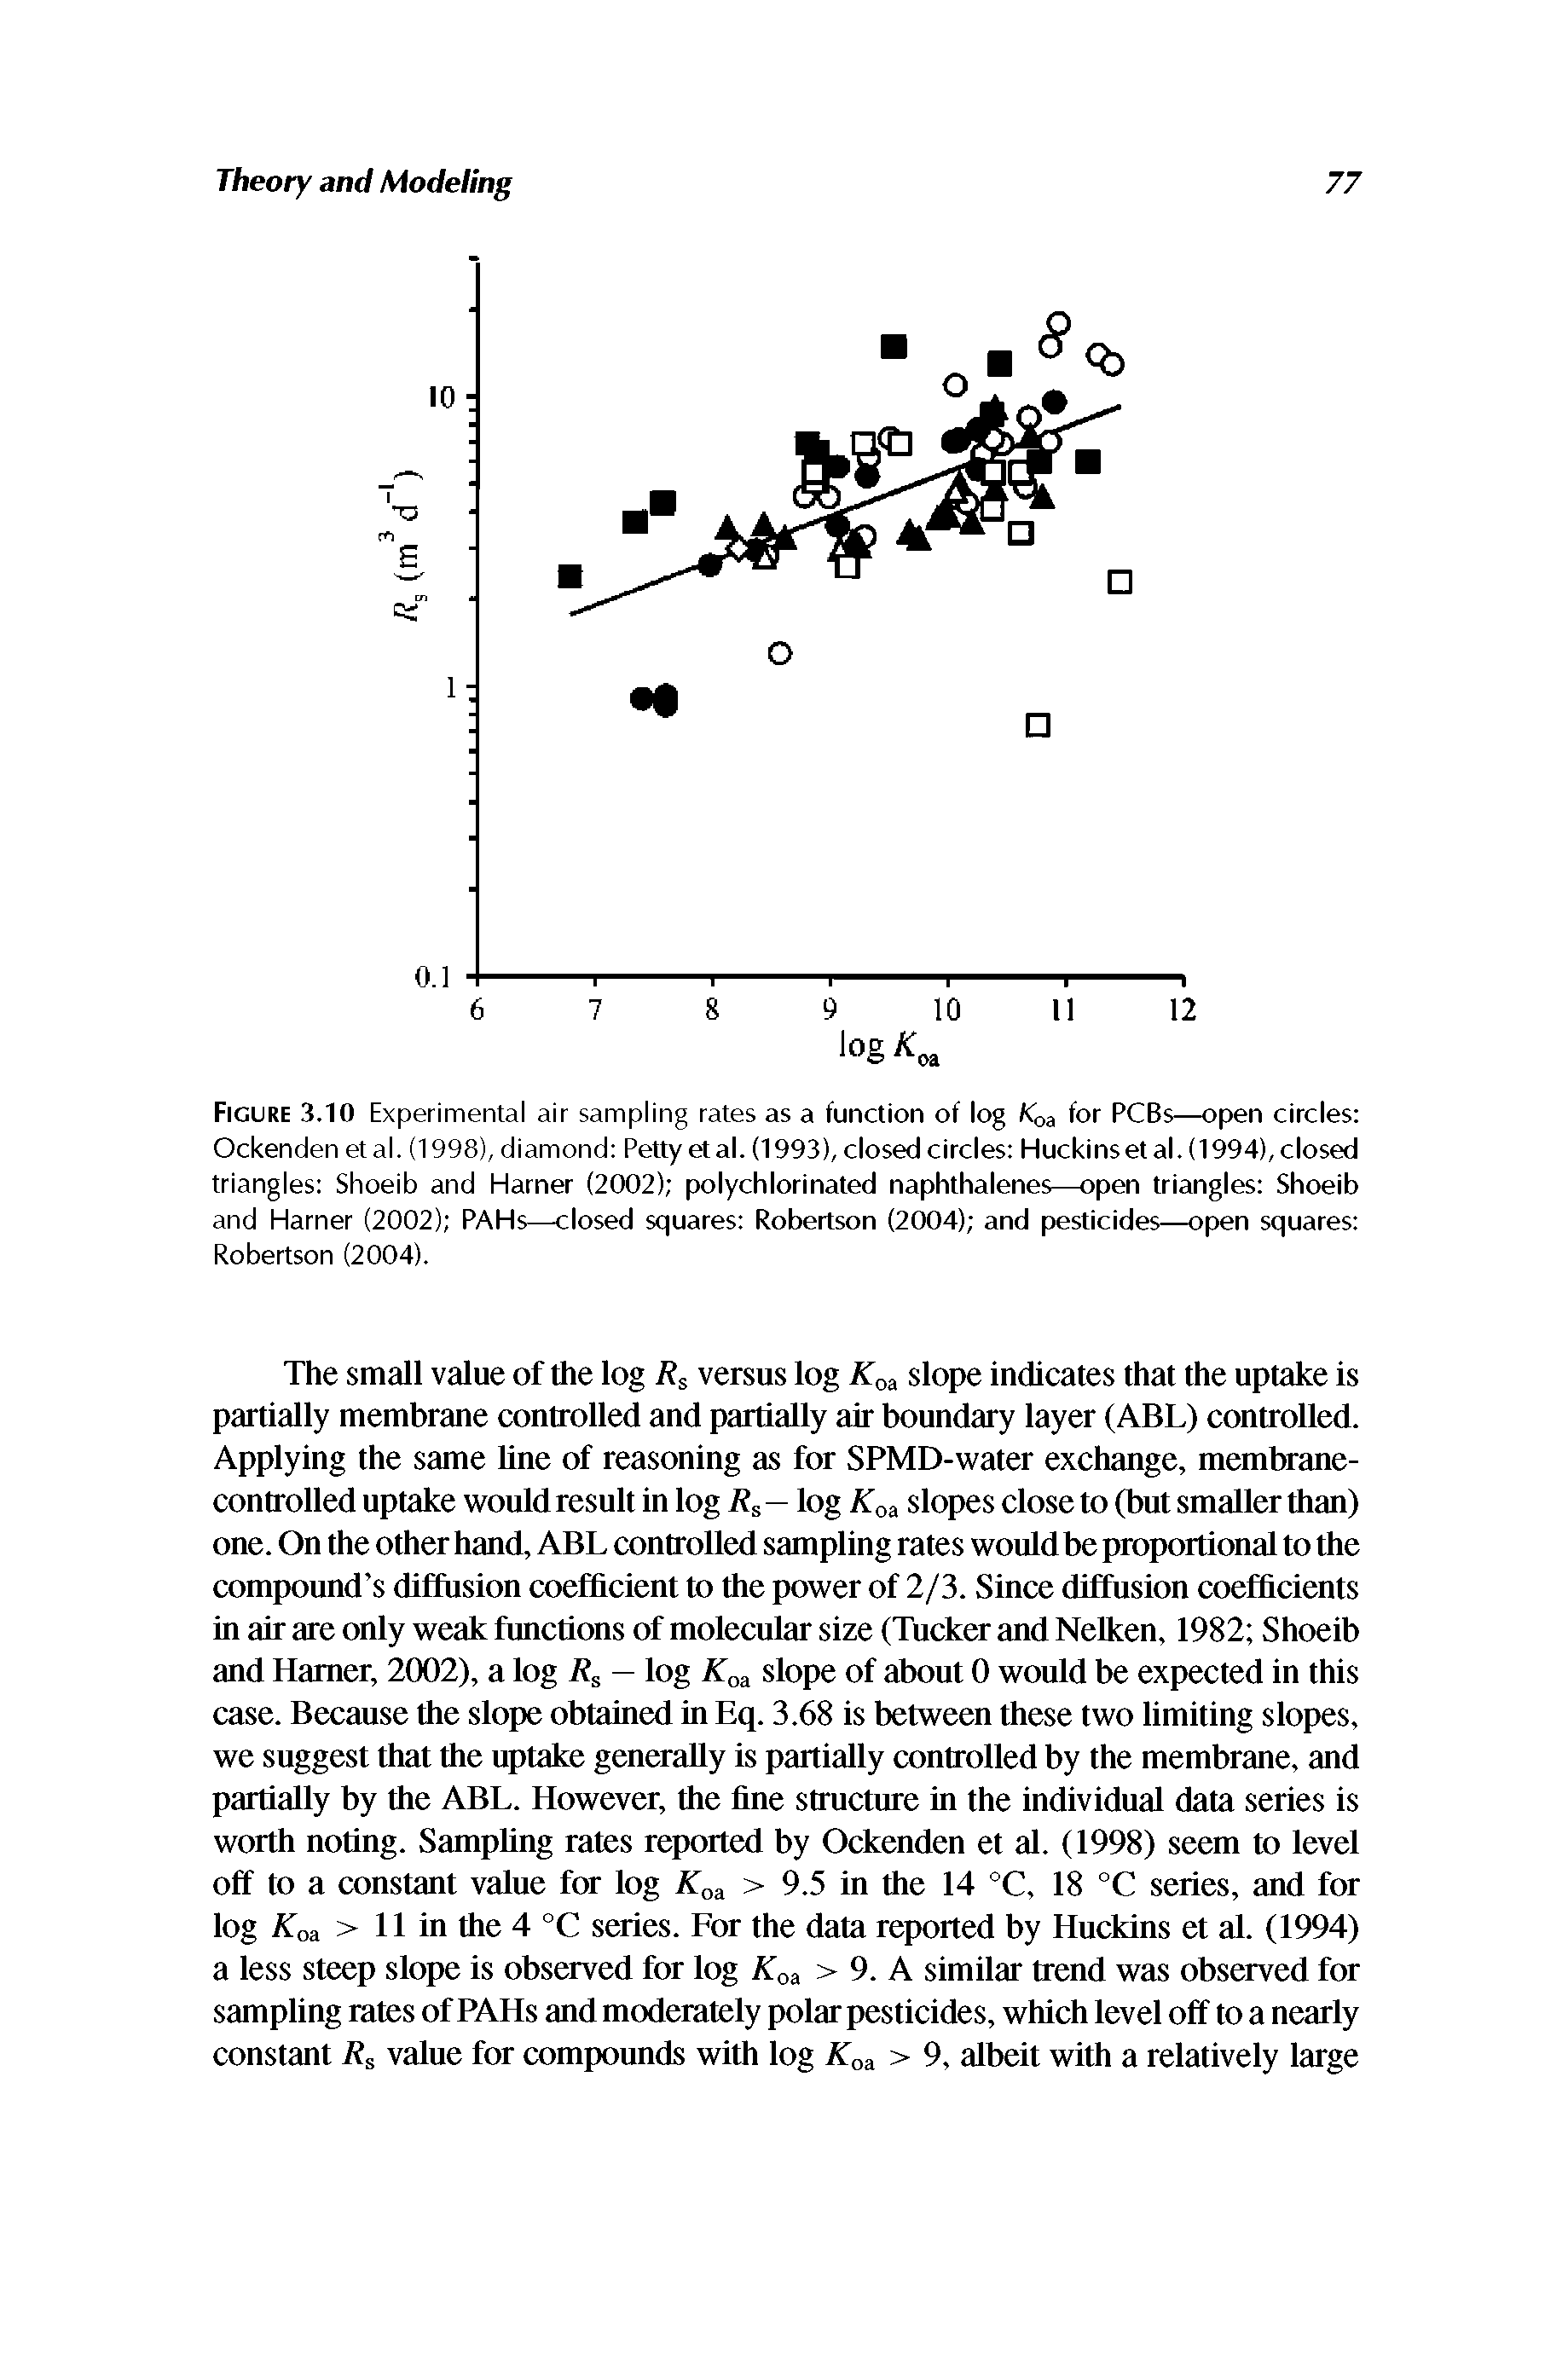 Figure 3.10 Experimental air sampling rates as a function of log Koa for PCBs—open circles Ockenden etal. (1998), diamond Petty etal. (1993), closed circles Huckinsetal. (1994), closed triangles Shoeib and Harner (2002) polychlorinated naphthalenes—open triangles Shoeib and Harner (2002) PAHs—closed squares Robertson (2004) and pesticides—open squares Robertson (2004).